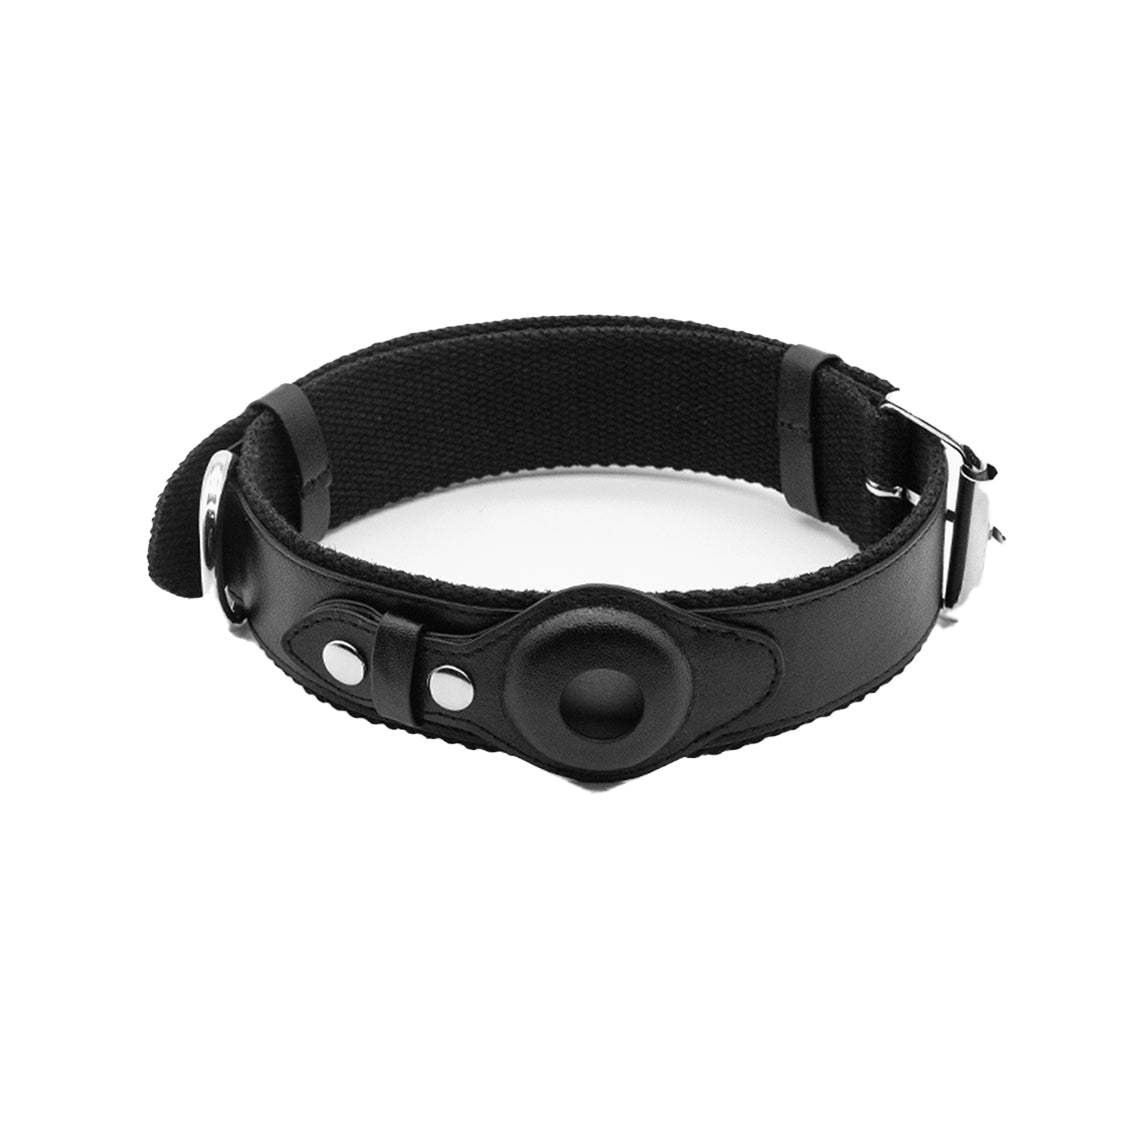 Black leather dog collar | Dog tracking collar black